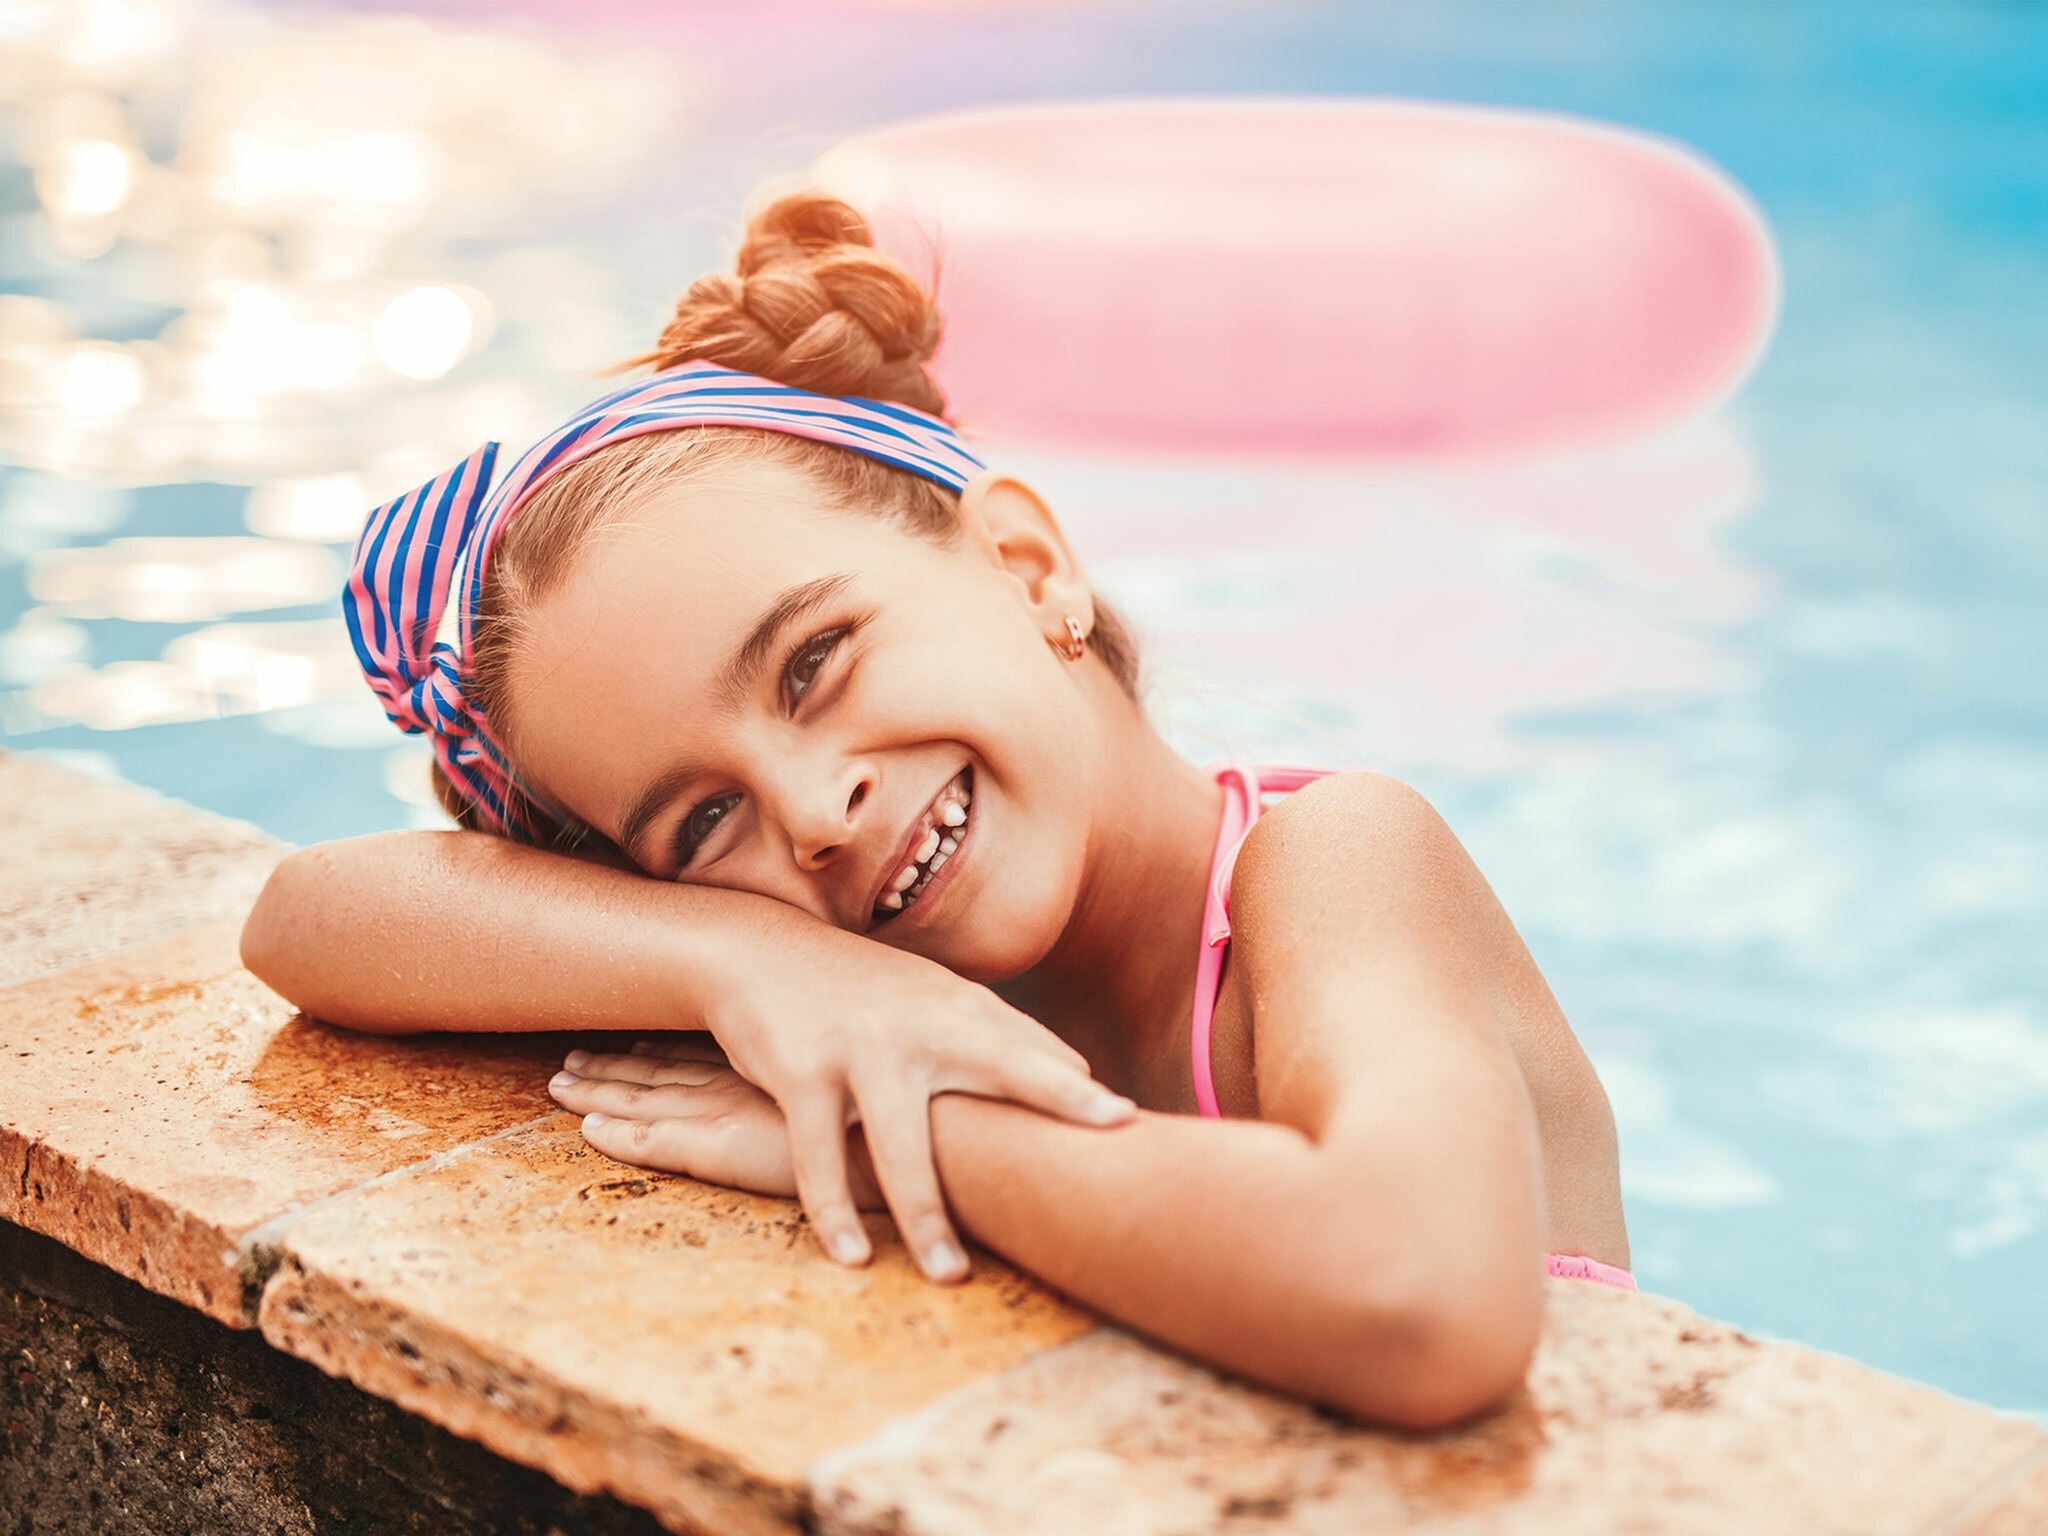 joyful little girl in swimming pool in aurora